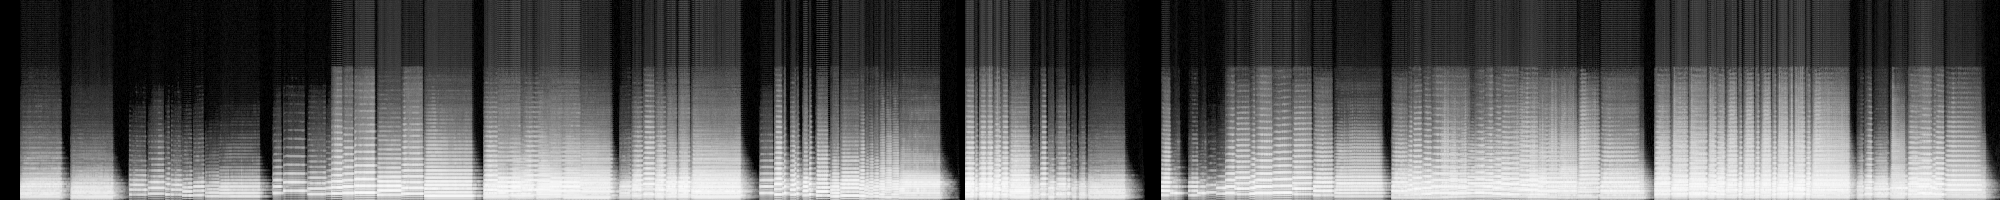 Spectrogram representation of audio